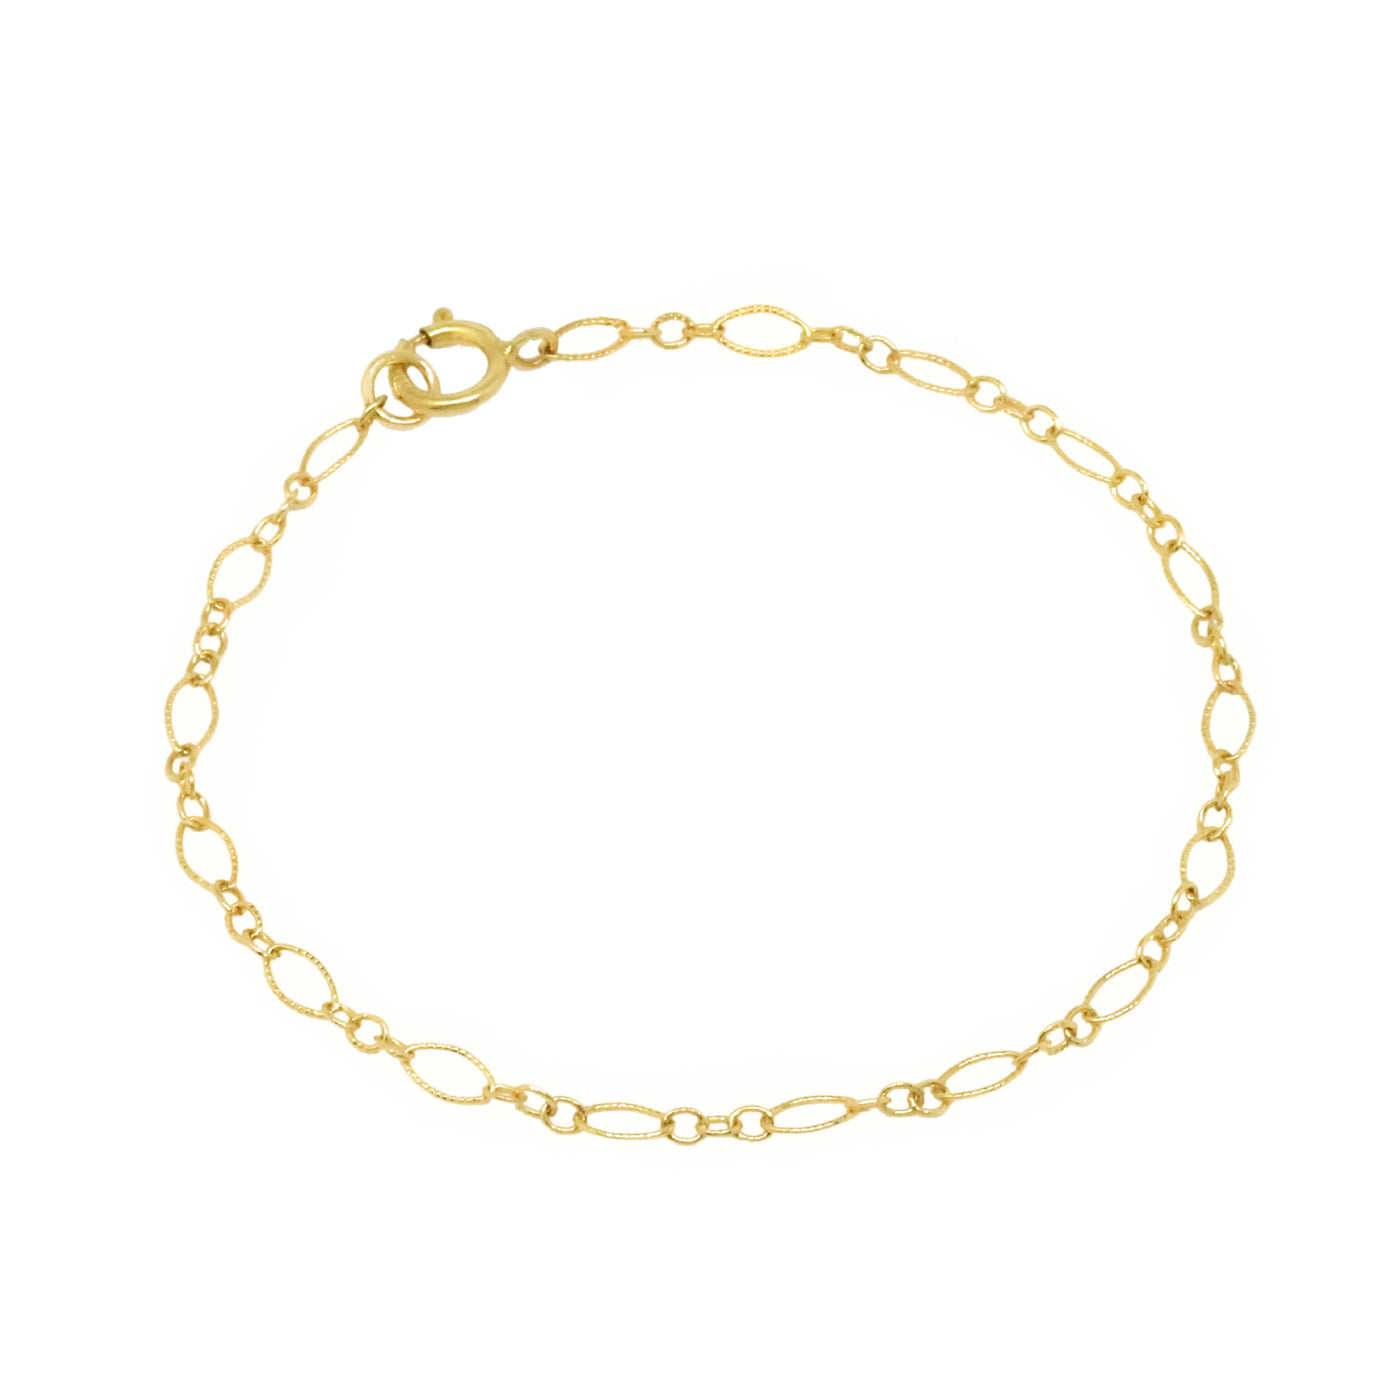 14K gold filled chain bracelet